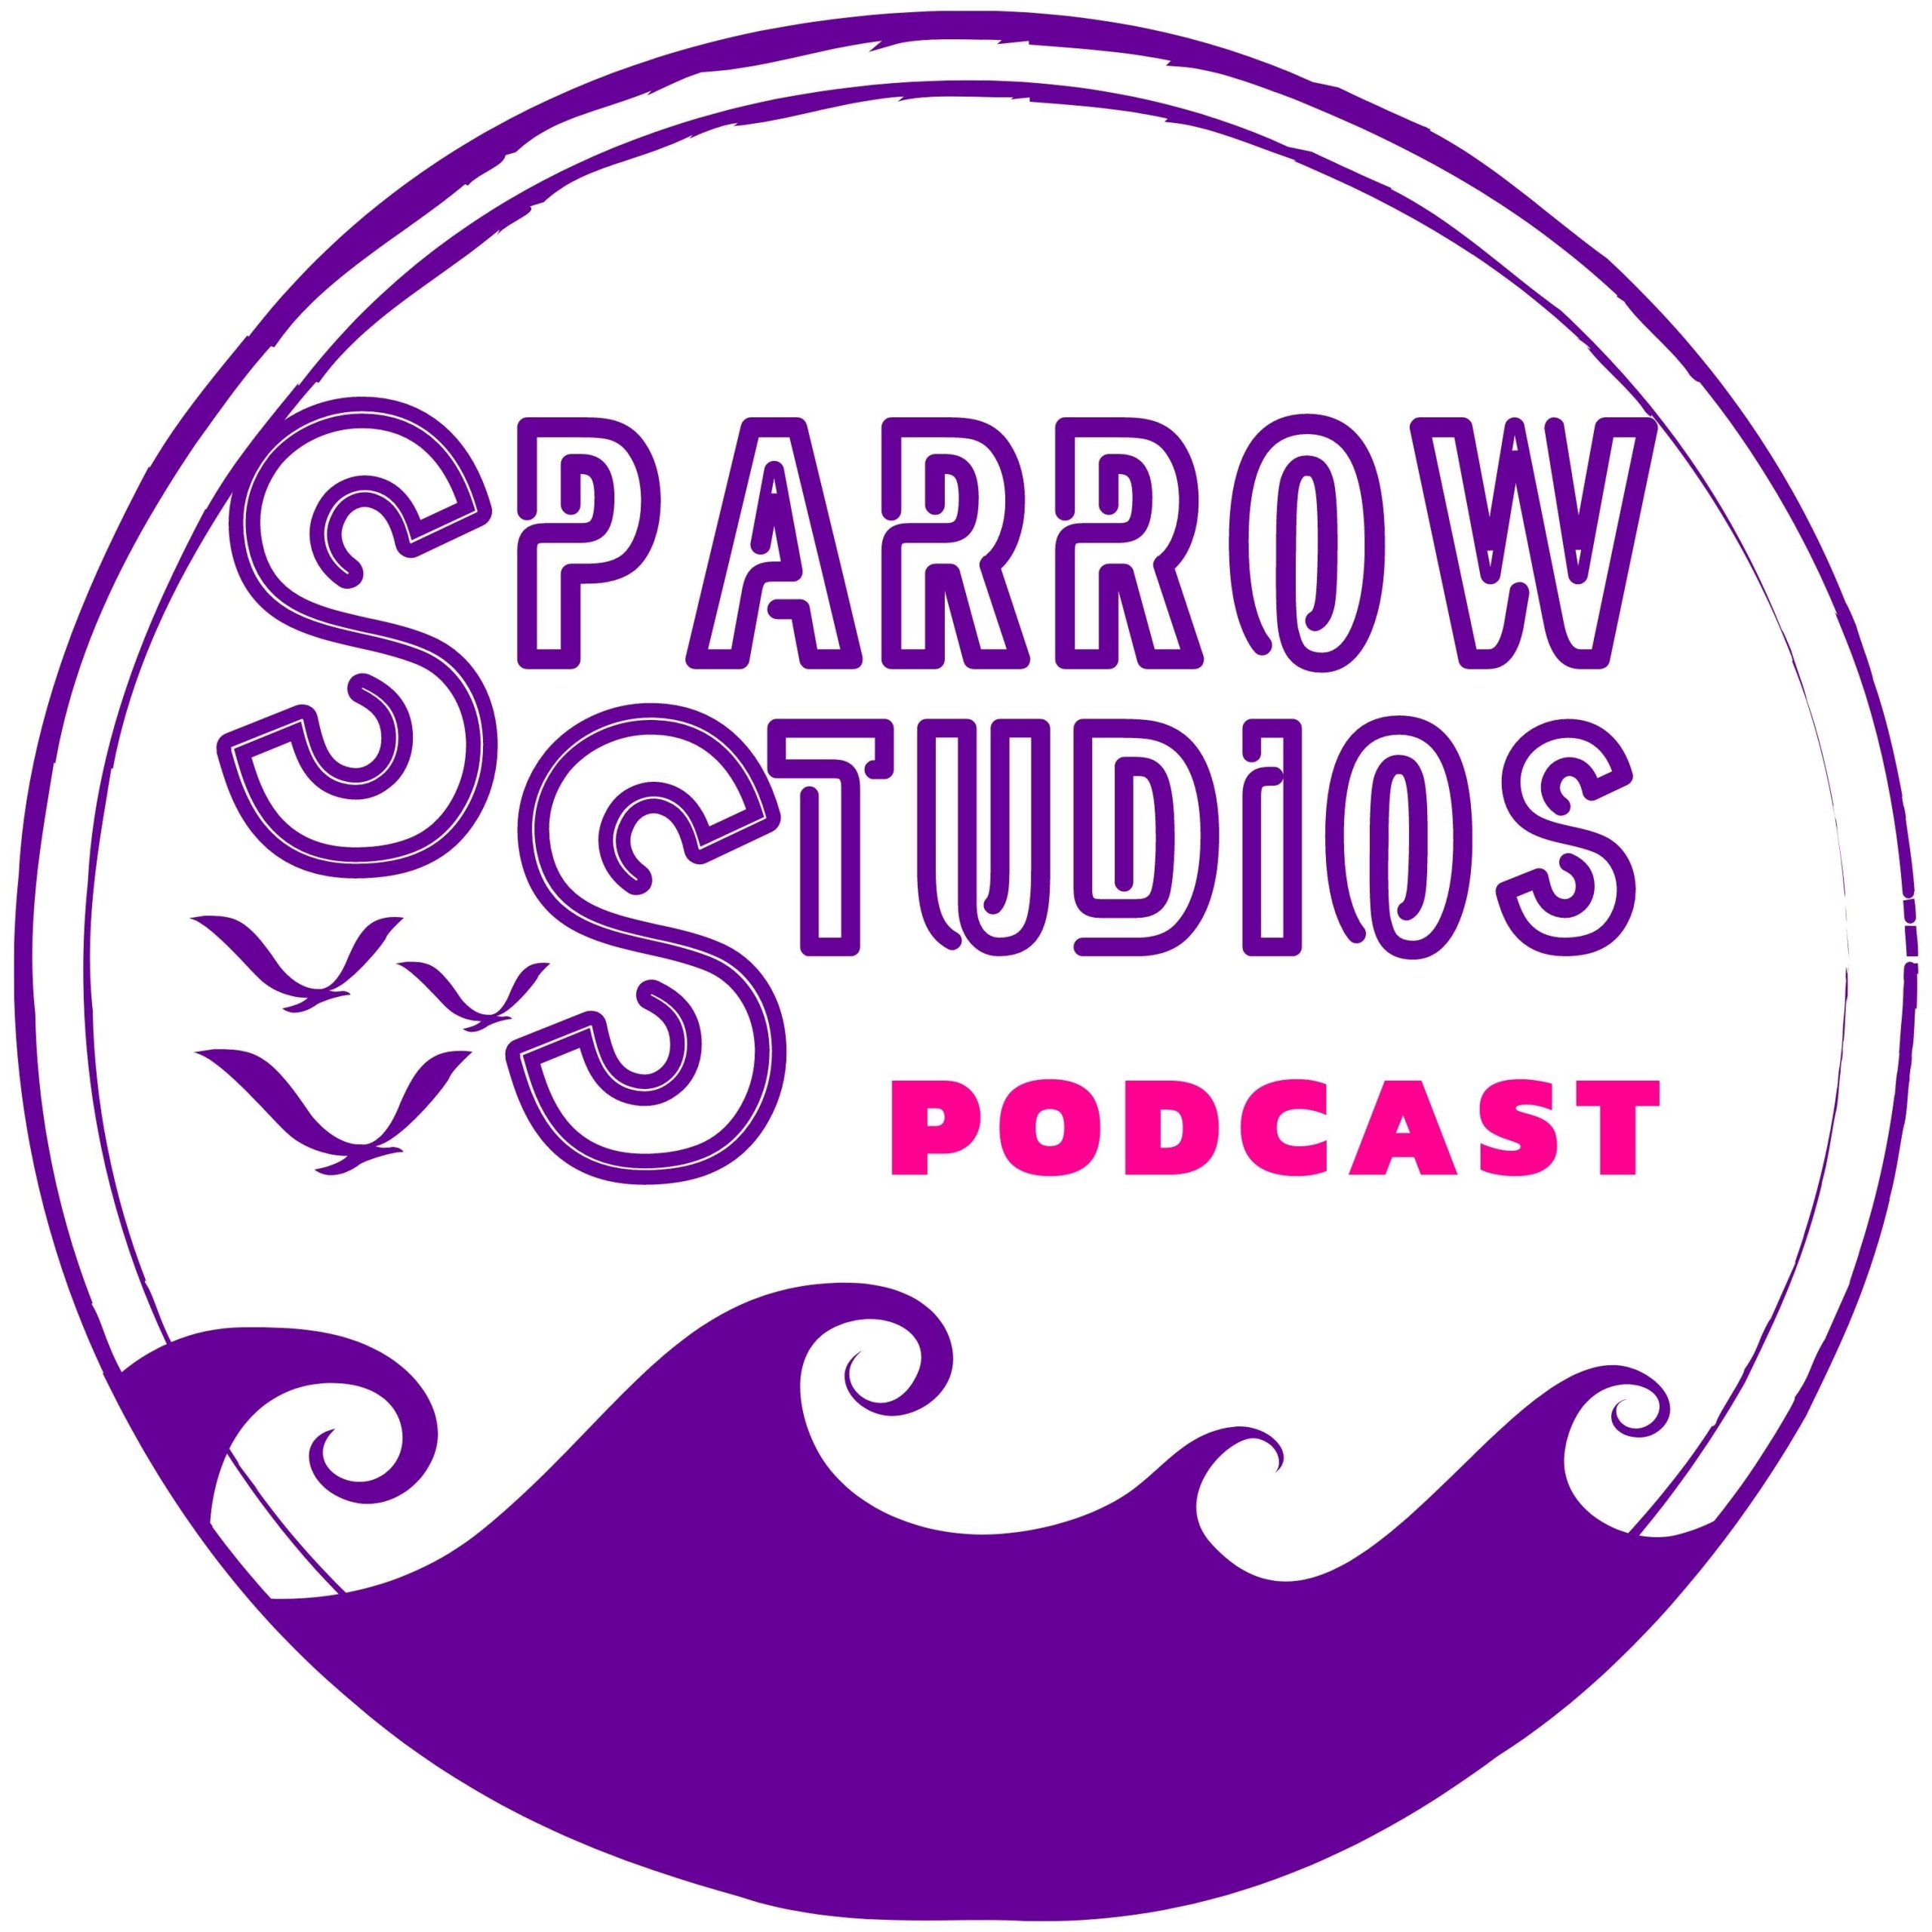 Sparrow Studios Podast